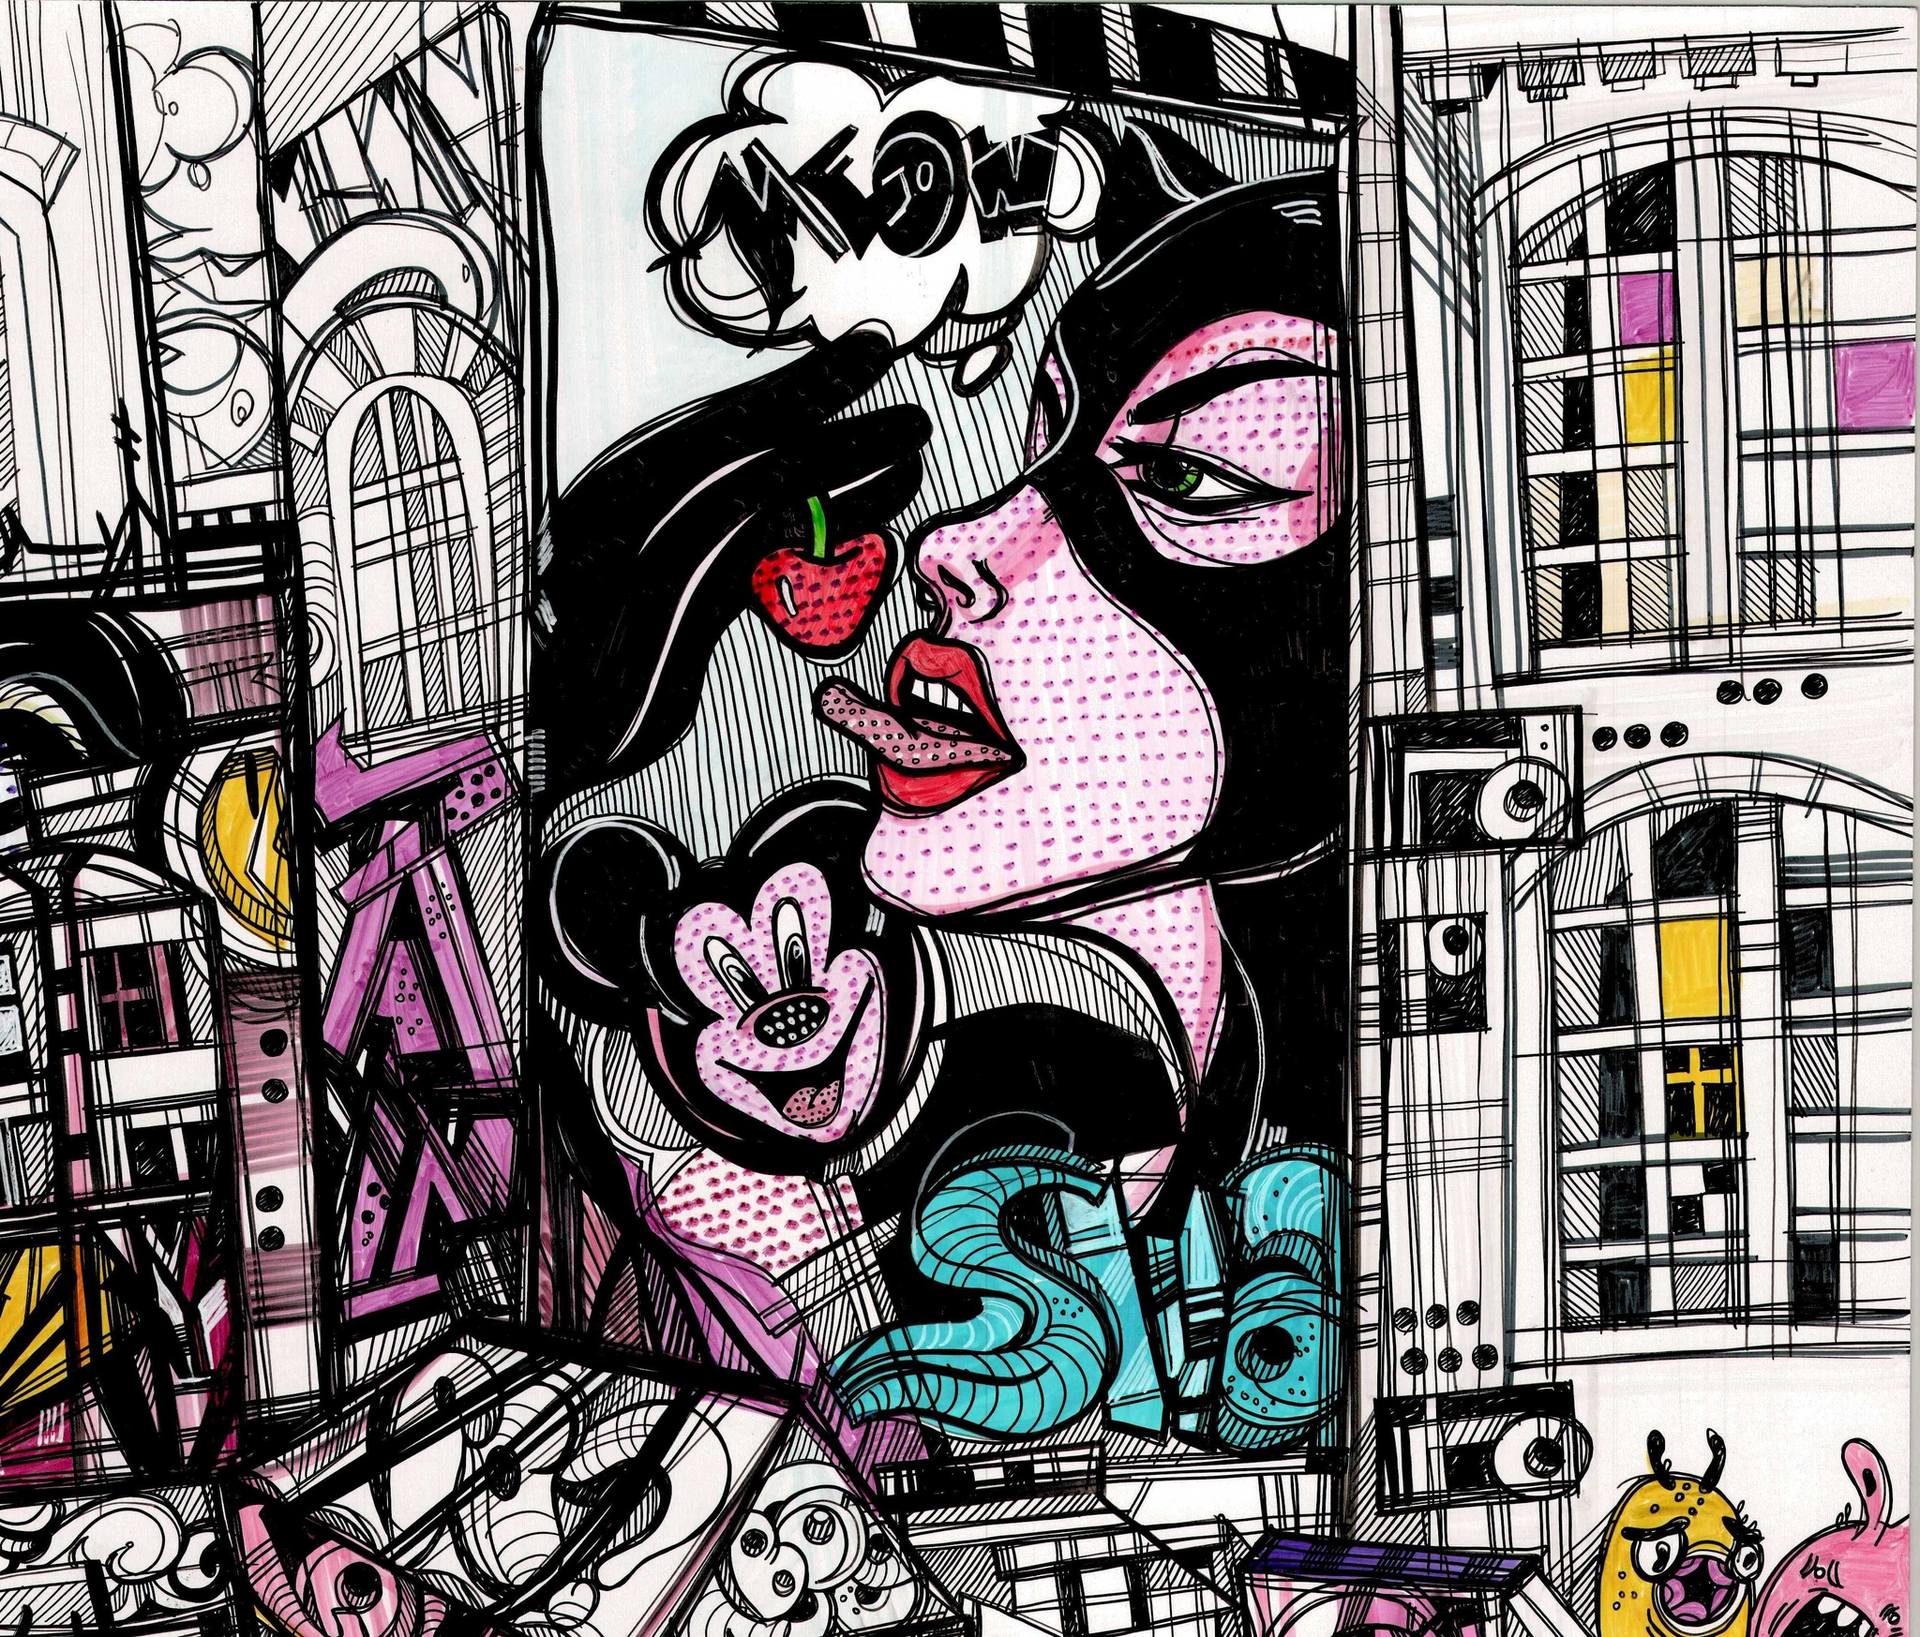 Tableau Graffiti Illustration Mickey- Pop art et street art